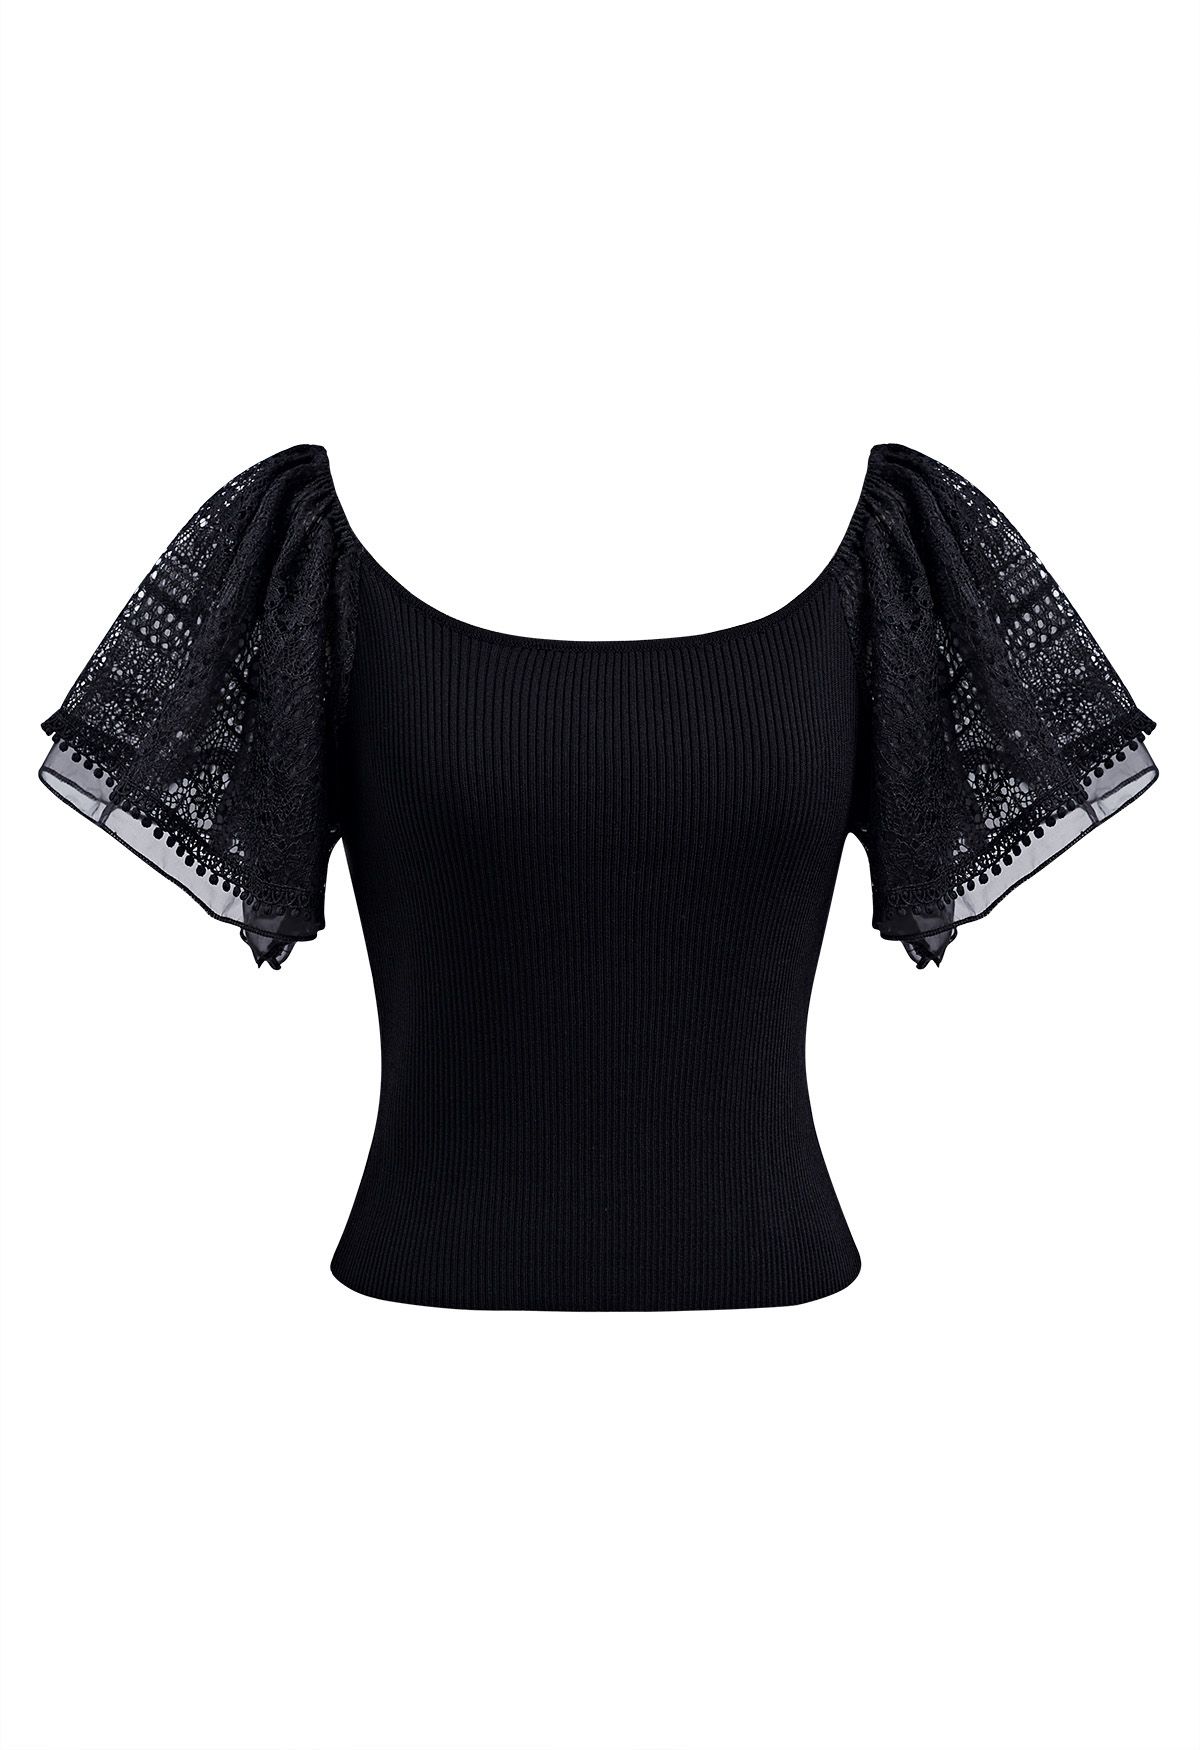 Cutwork Lace Flutter Sleeves Spliced Knit Top in Black